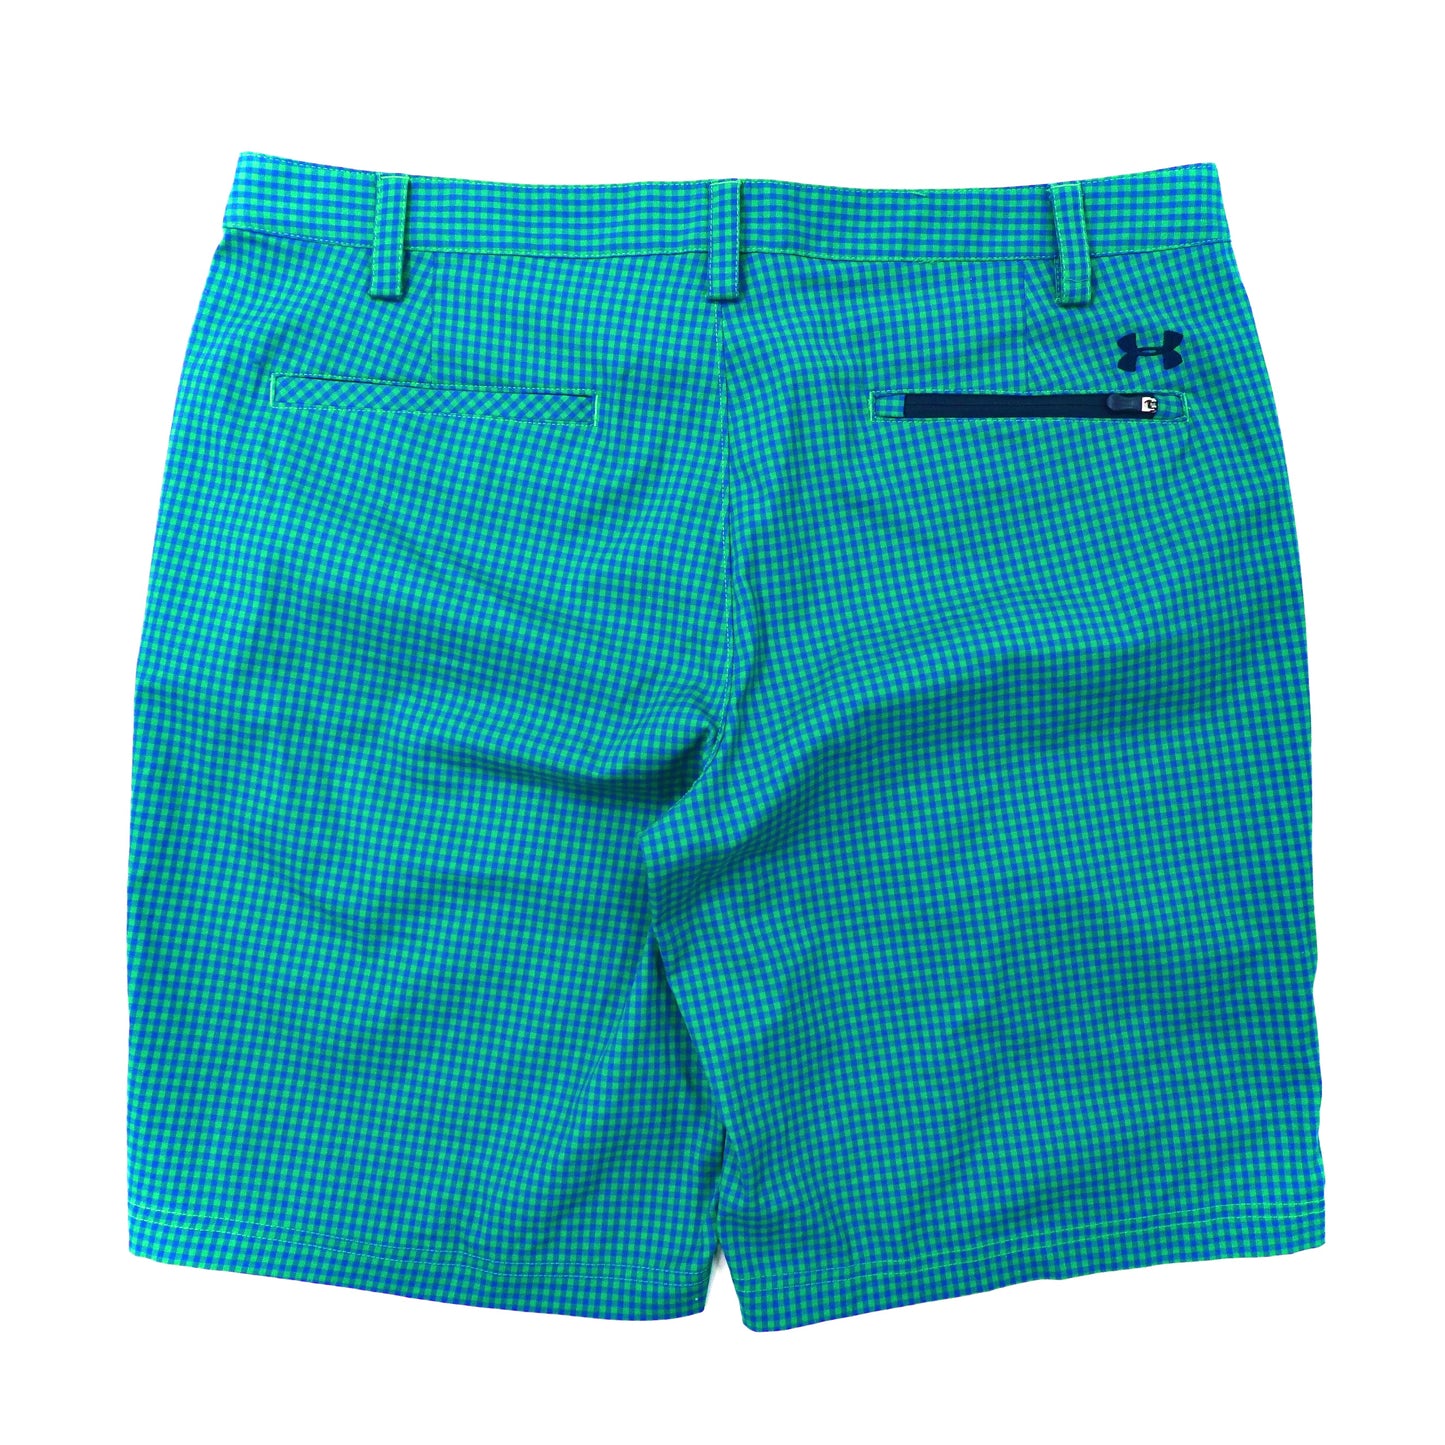 UNDER ARMOUR ゴルフドレスショートパンツ 38 グリーン チェック  Golf Dress Shorts 1242764